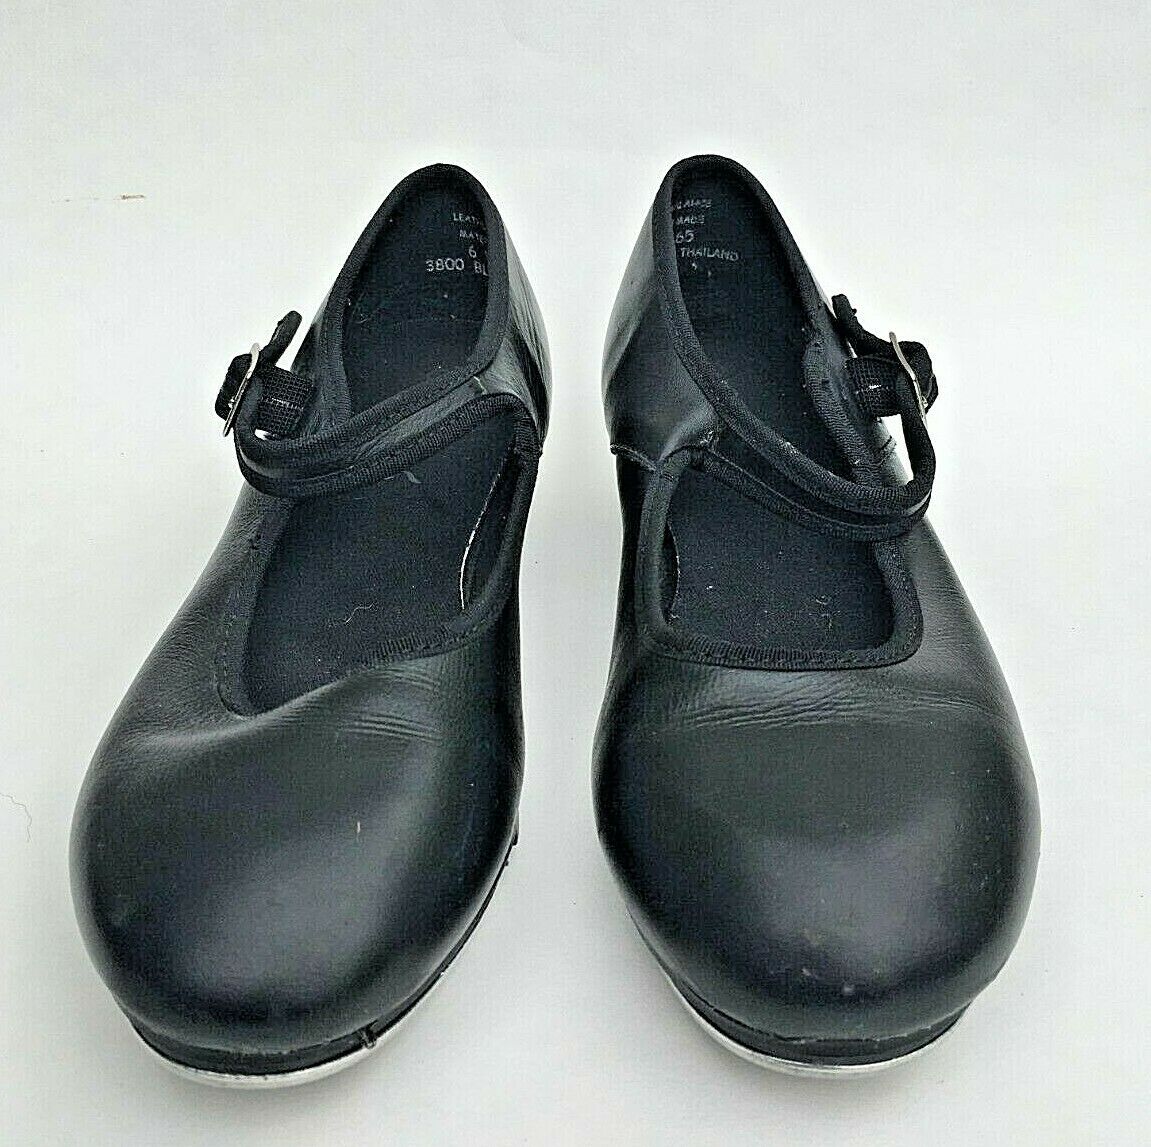 Capezio 3800t Tap Shoes Girl's Size 6 W, Black Patent Mary Jane Tele Tone Taps